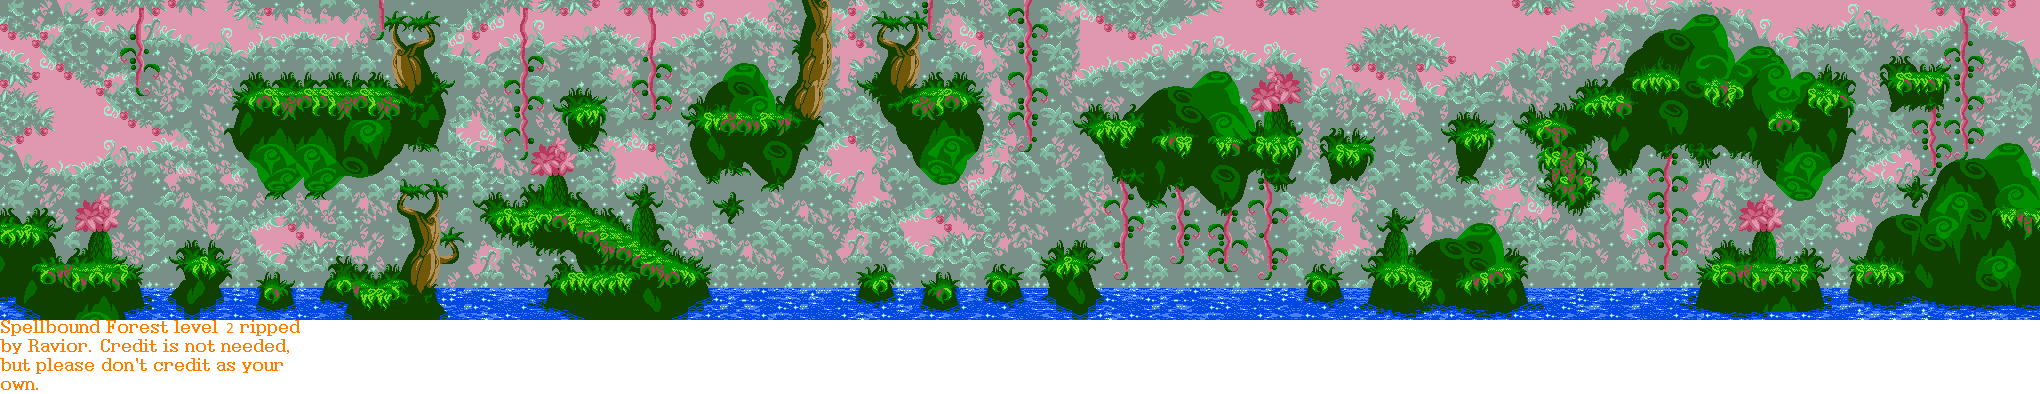 Rayman - Spellbound Forest 2